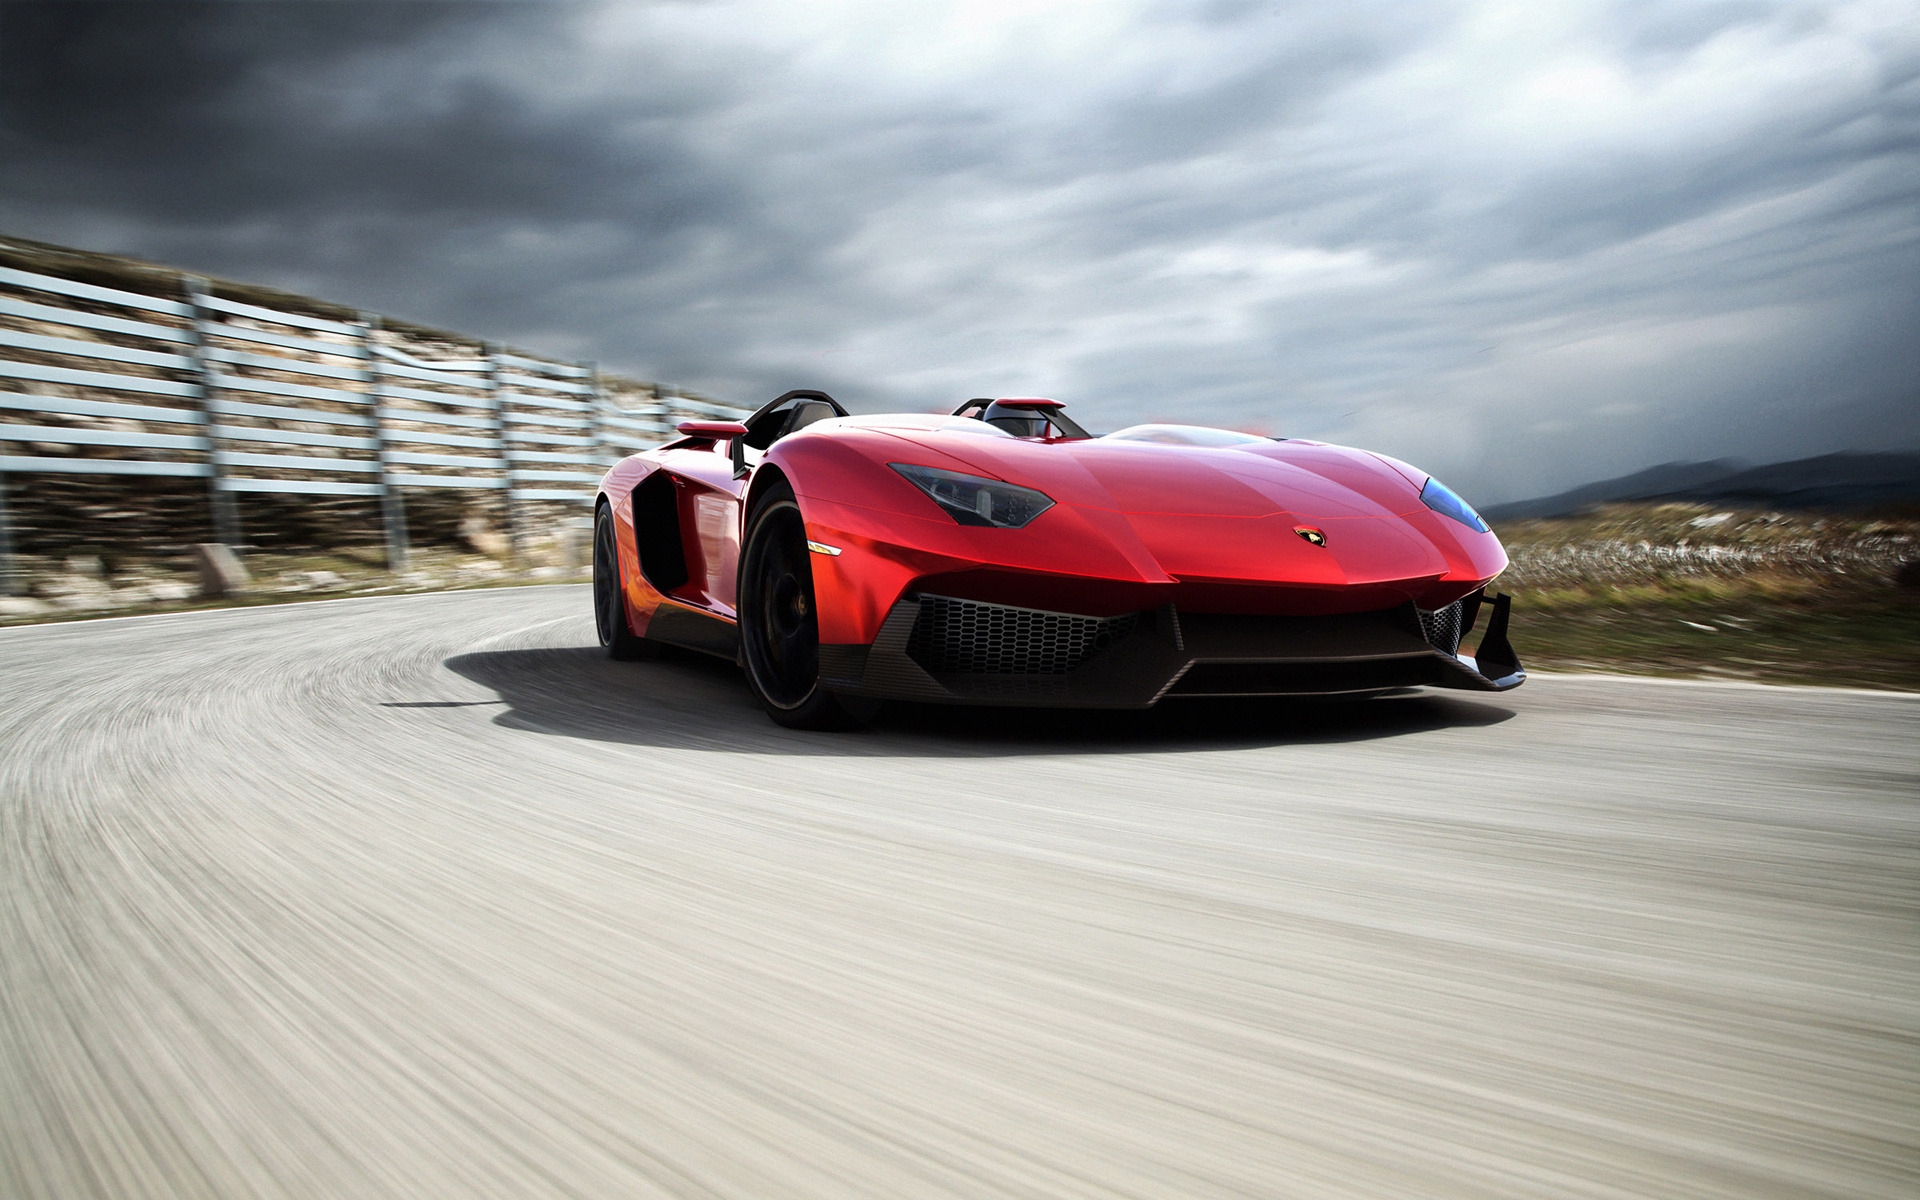 2012 Lamborghini Aventador J Speed for 1920 x 1200 widescreen resolution